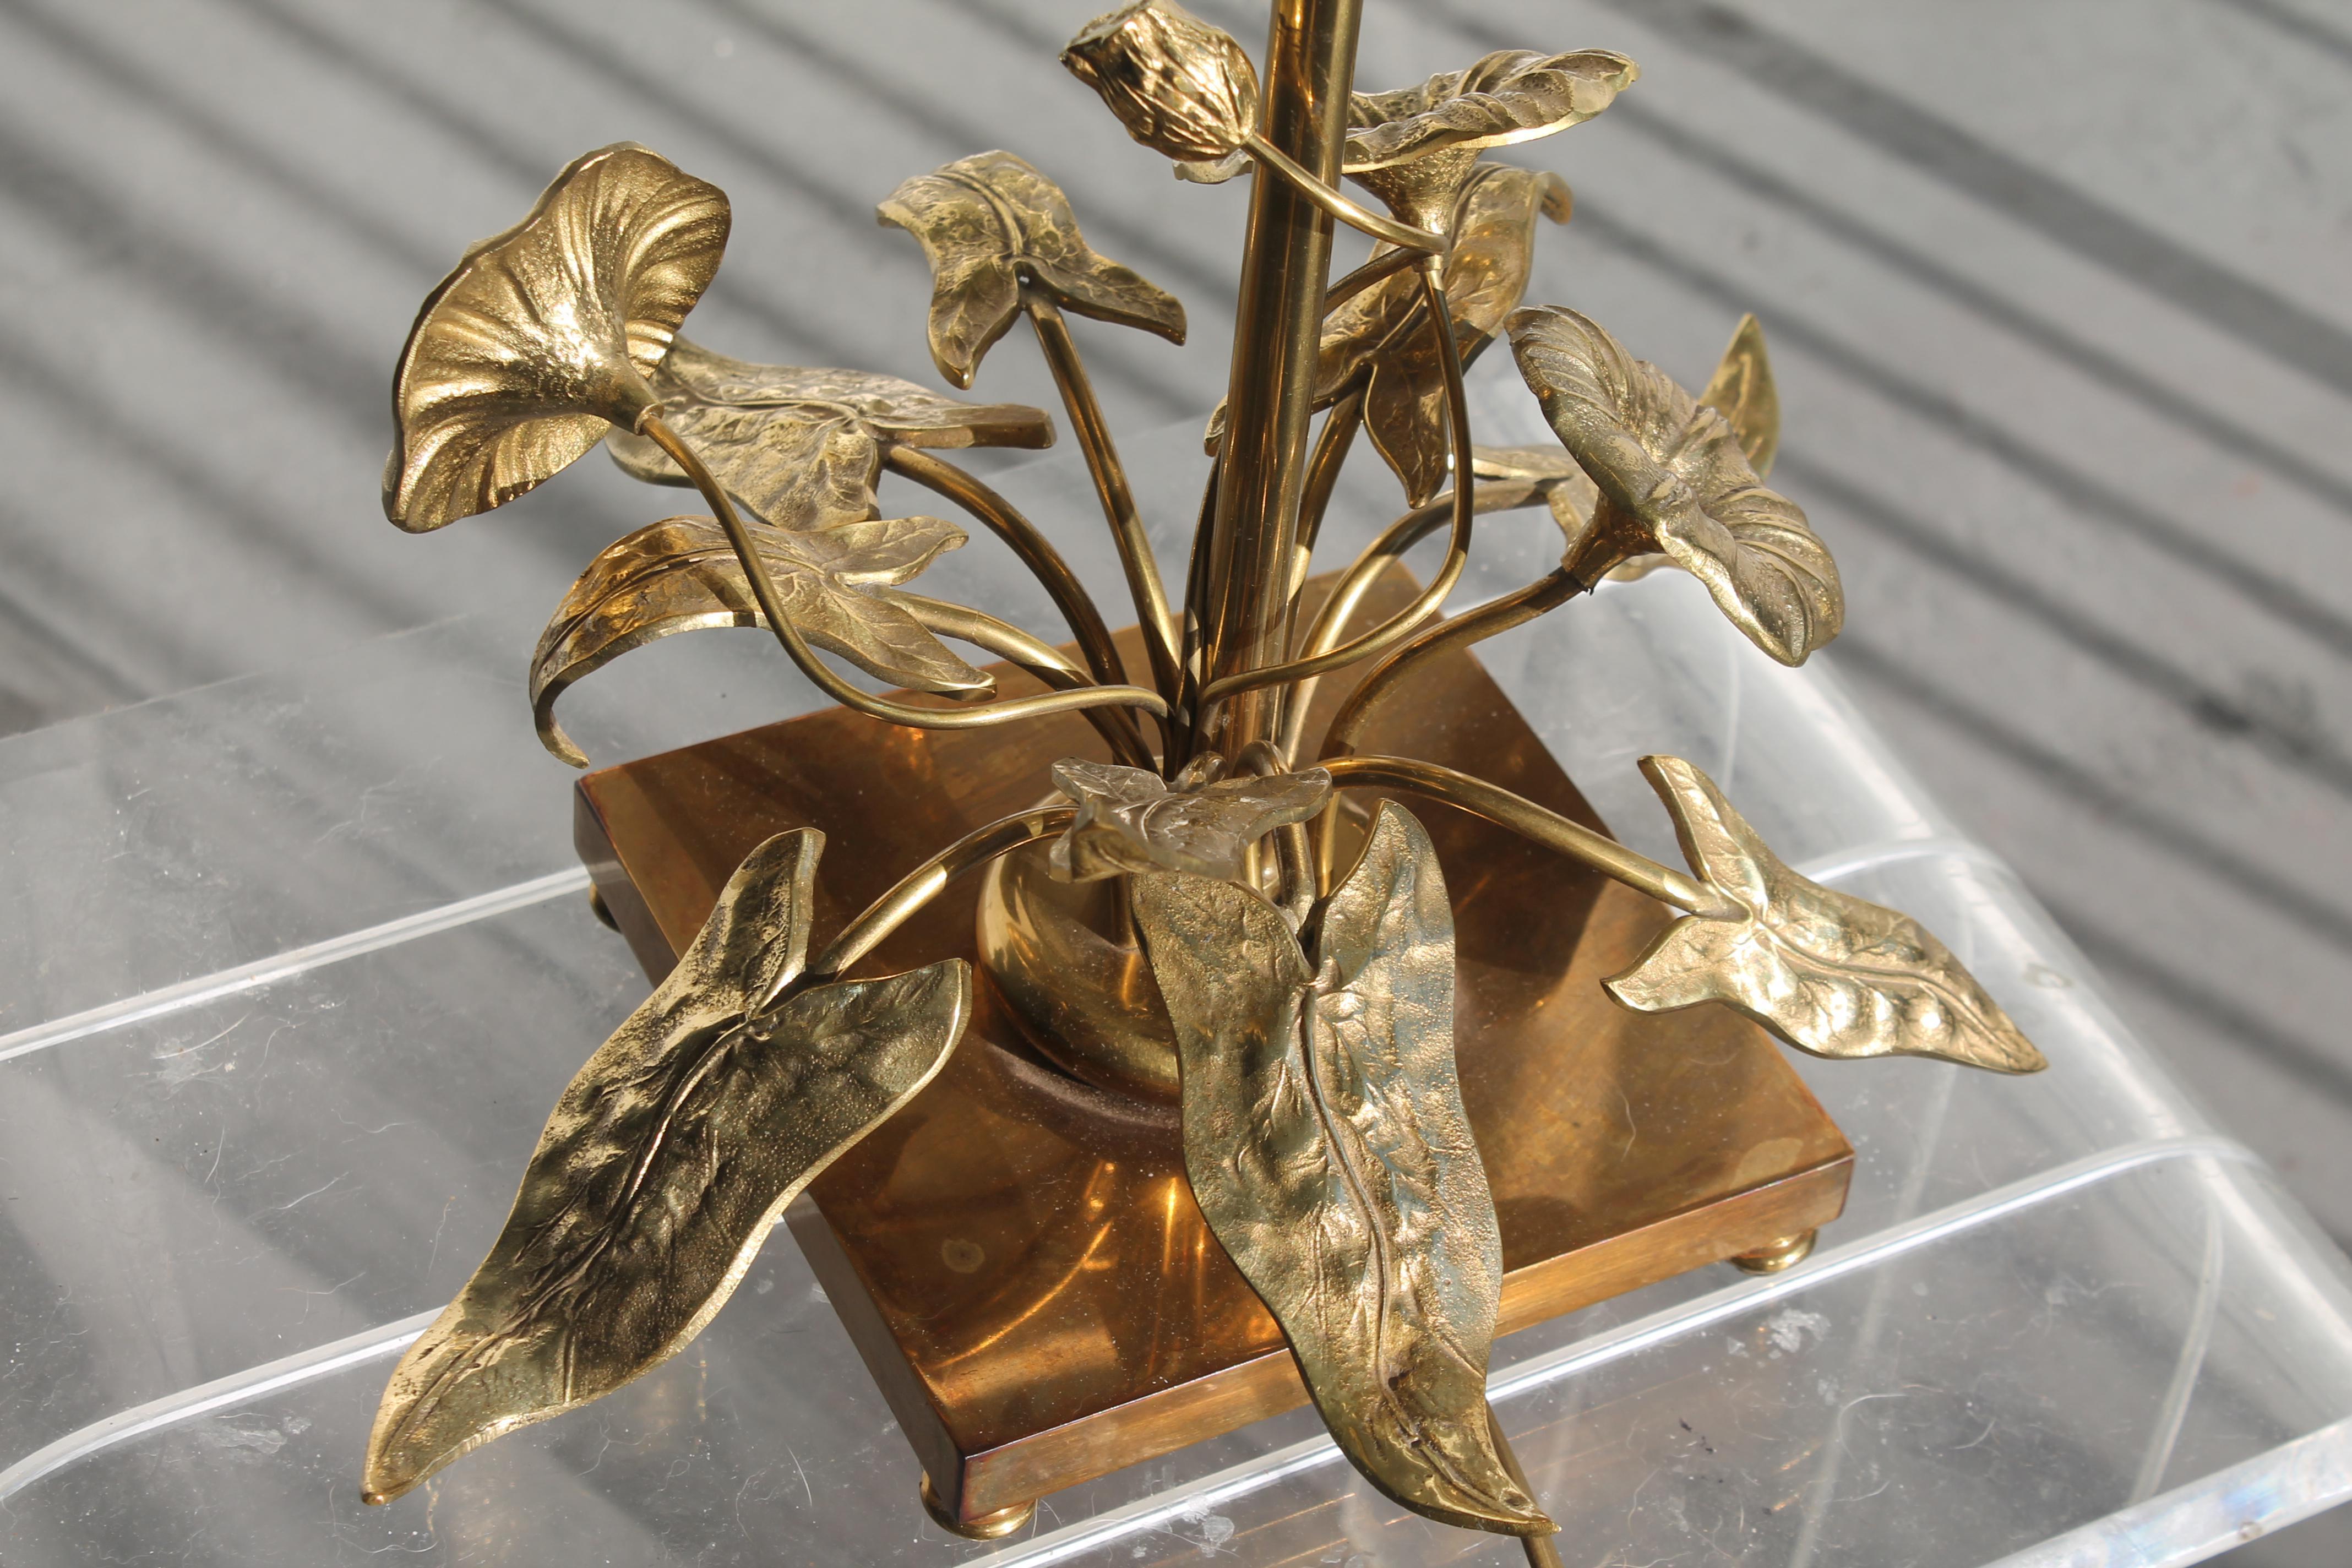 1960s French Mid Century Modern Gilt Bronze FloralTable Lamp att. Maison Charles For Sale 1